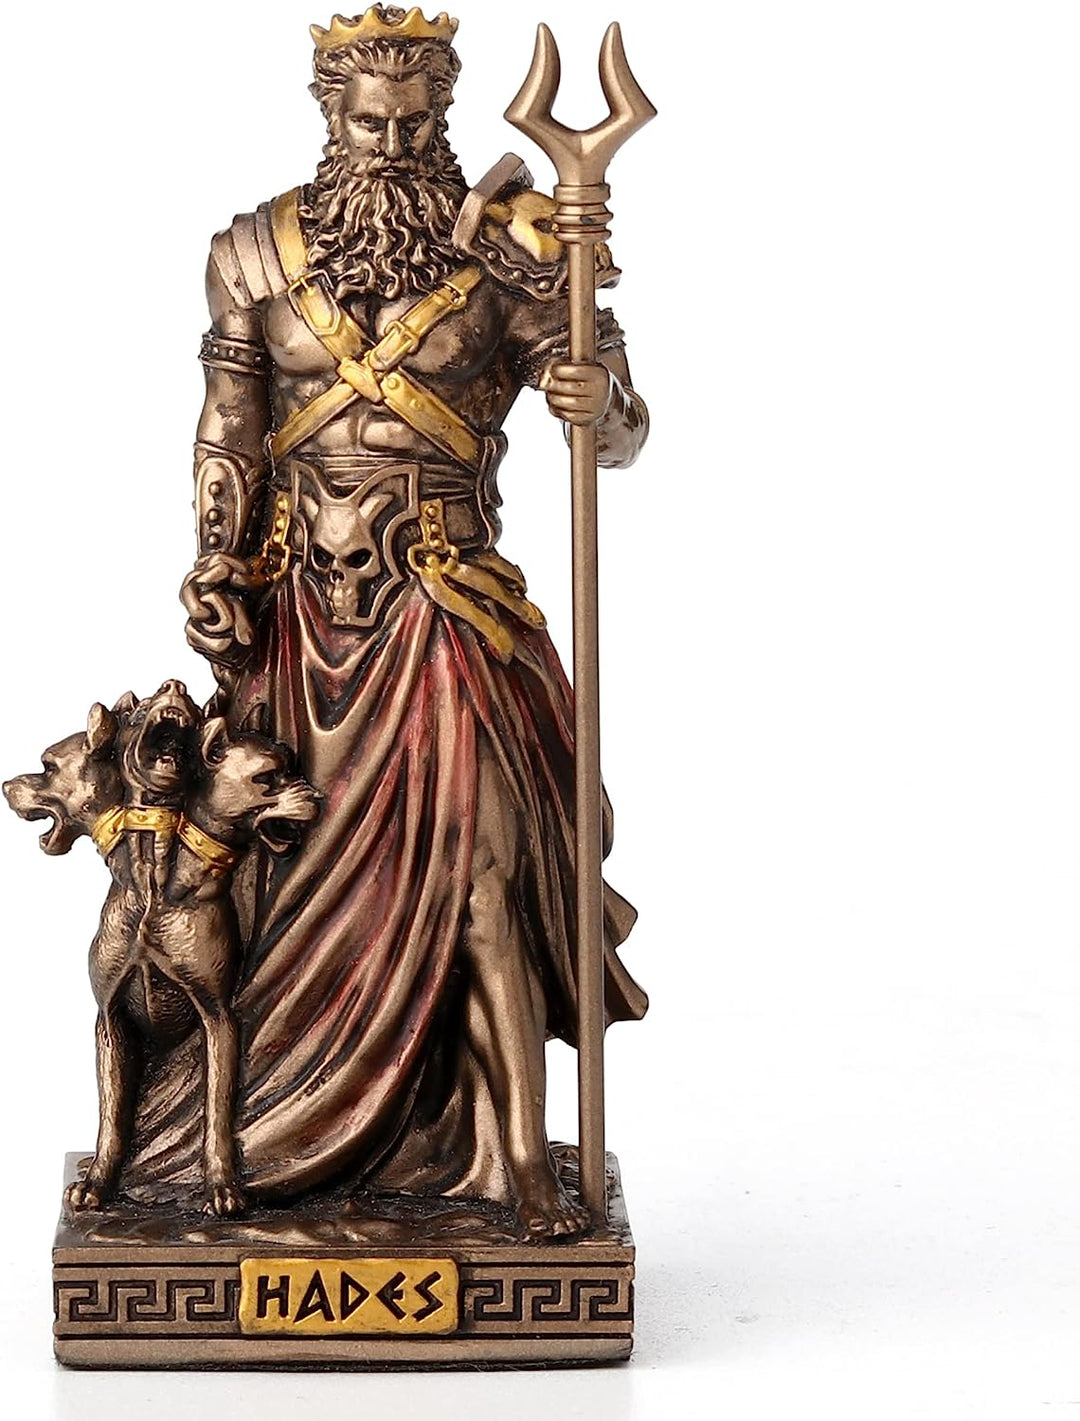 Hades Greek God of Underworld bronzed figure